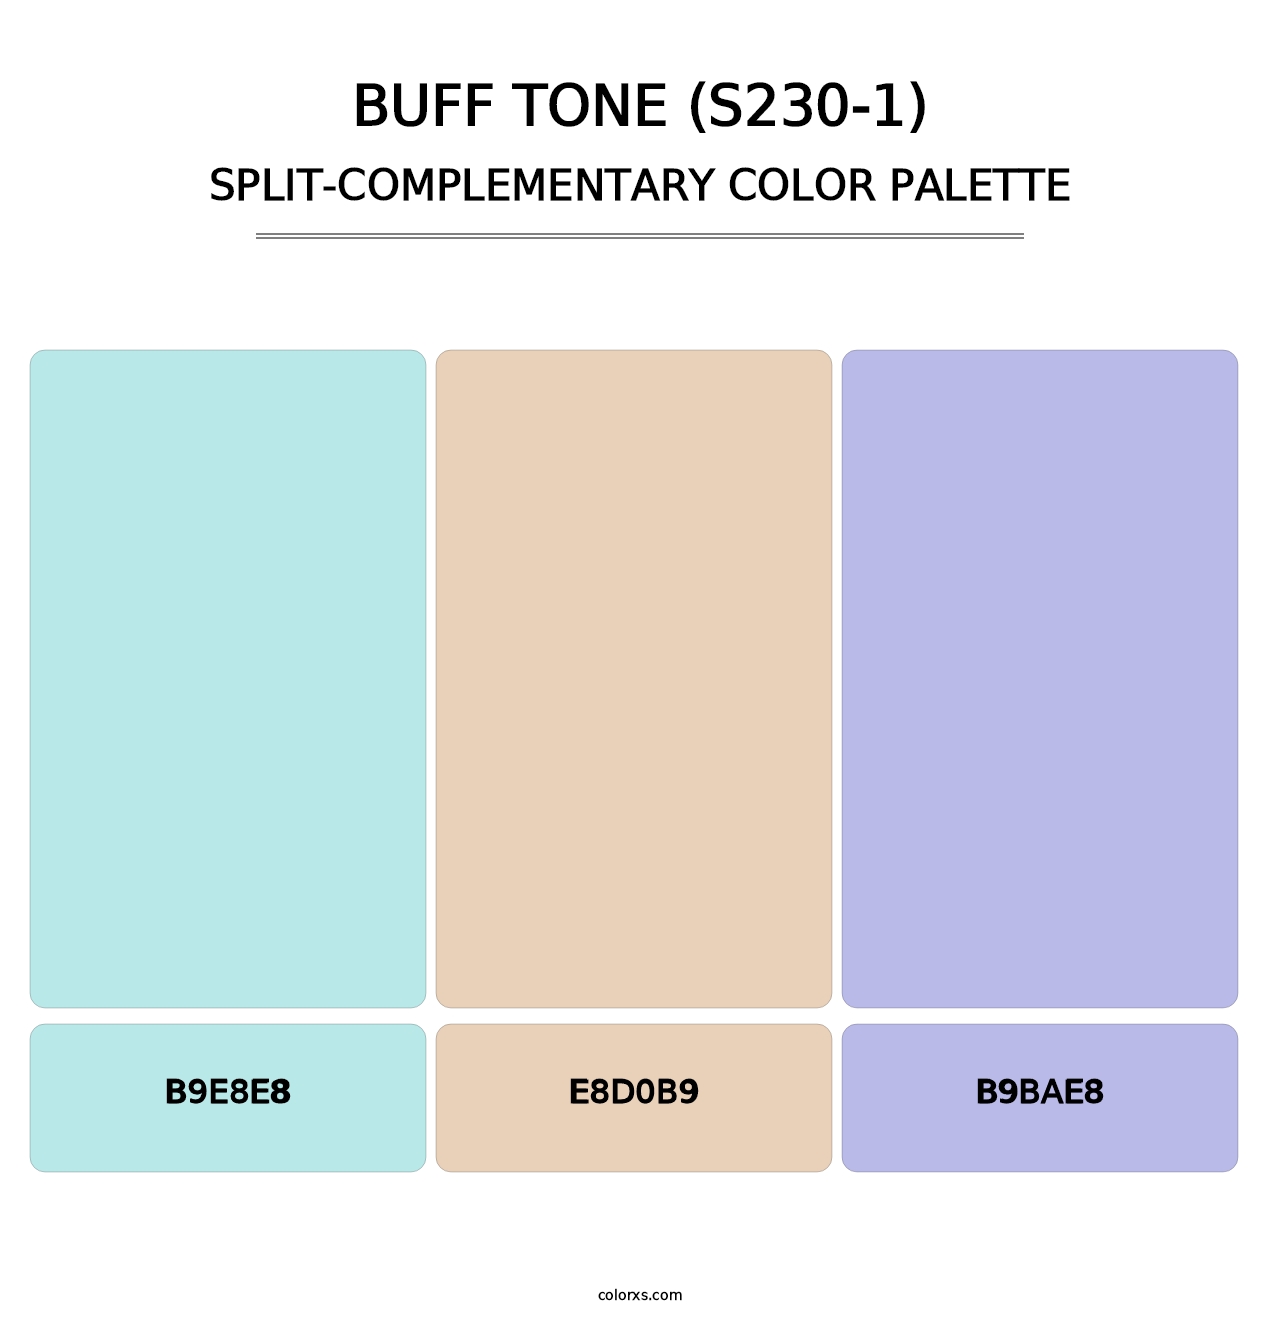 Buff Tone (S230-1) - Split-Complementary Color Palette